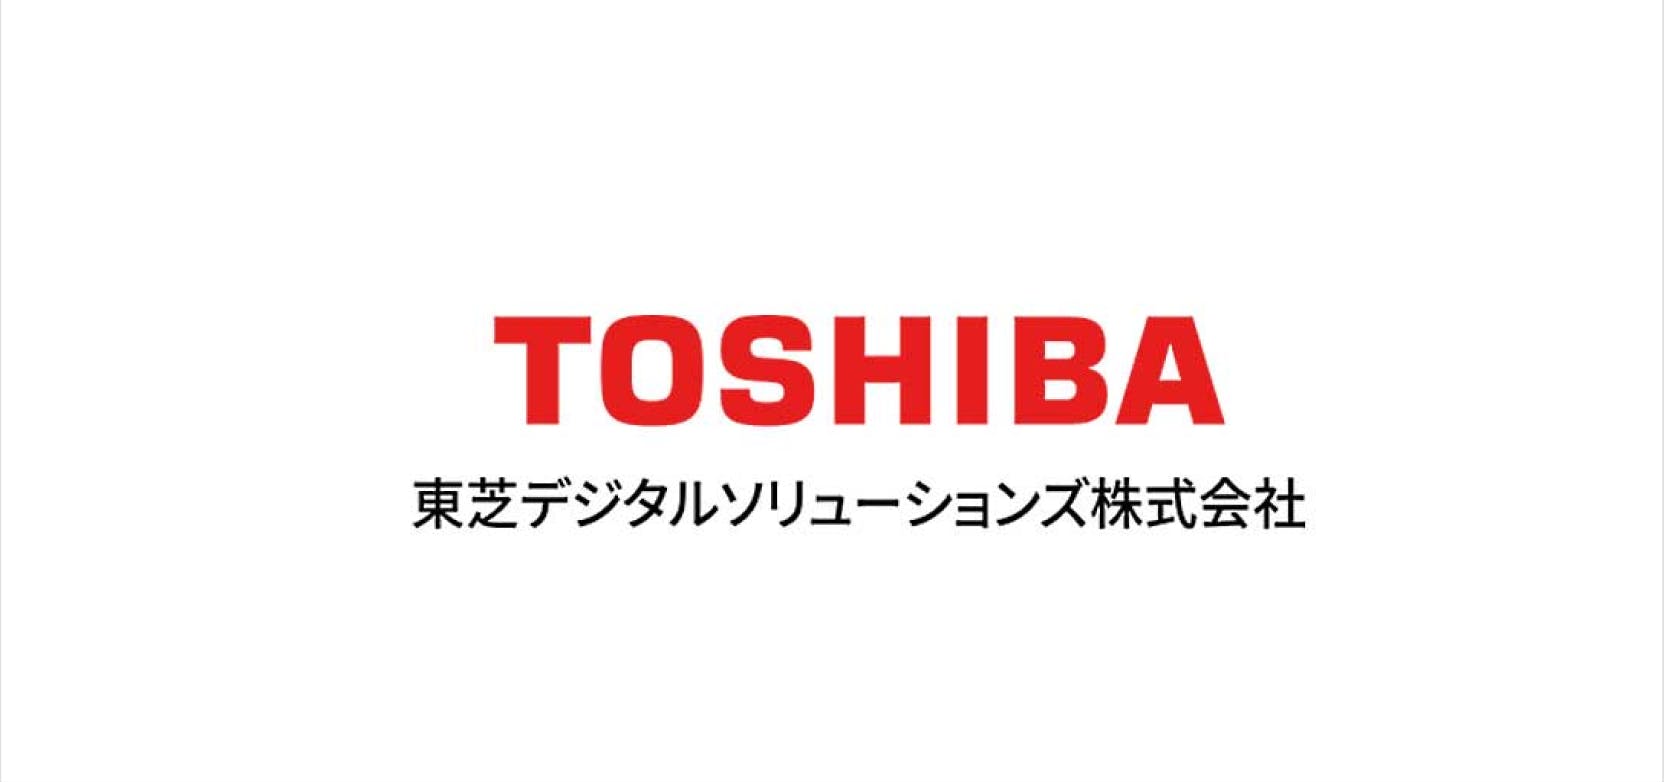 TOSHIBA DIGITAL SOLUTIONS CORPORATION